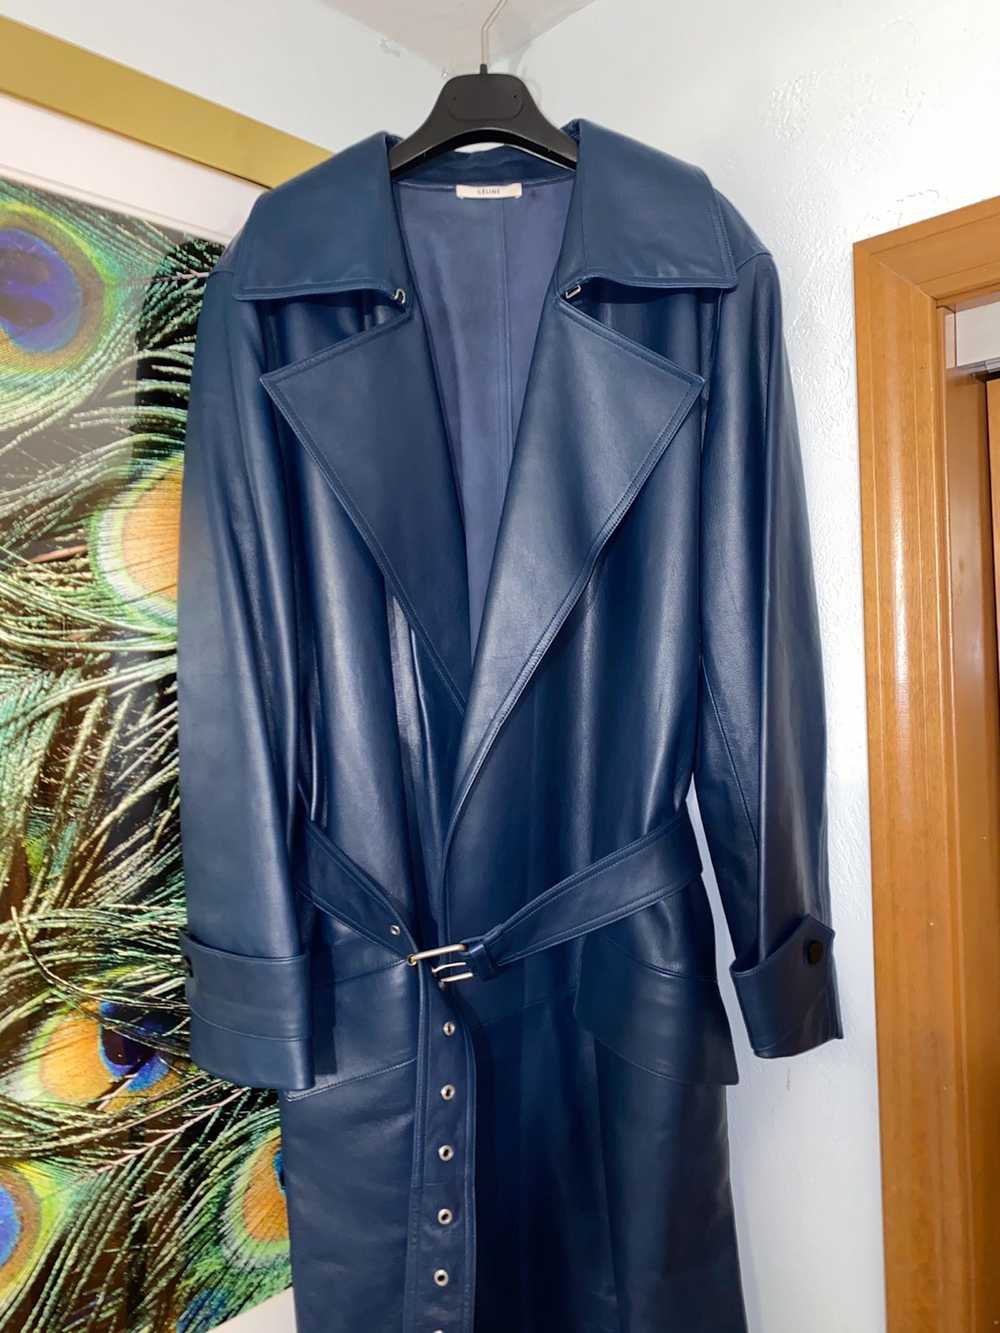 Celine Rare Navy Lamb Leather Céline Trench Coat - image 2